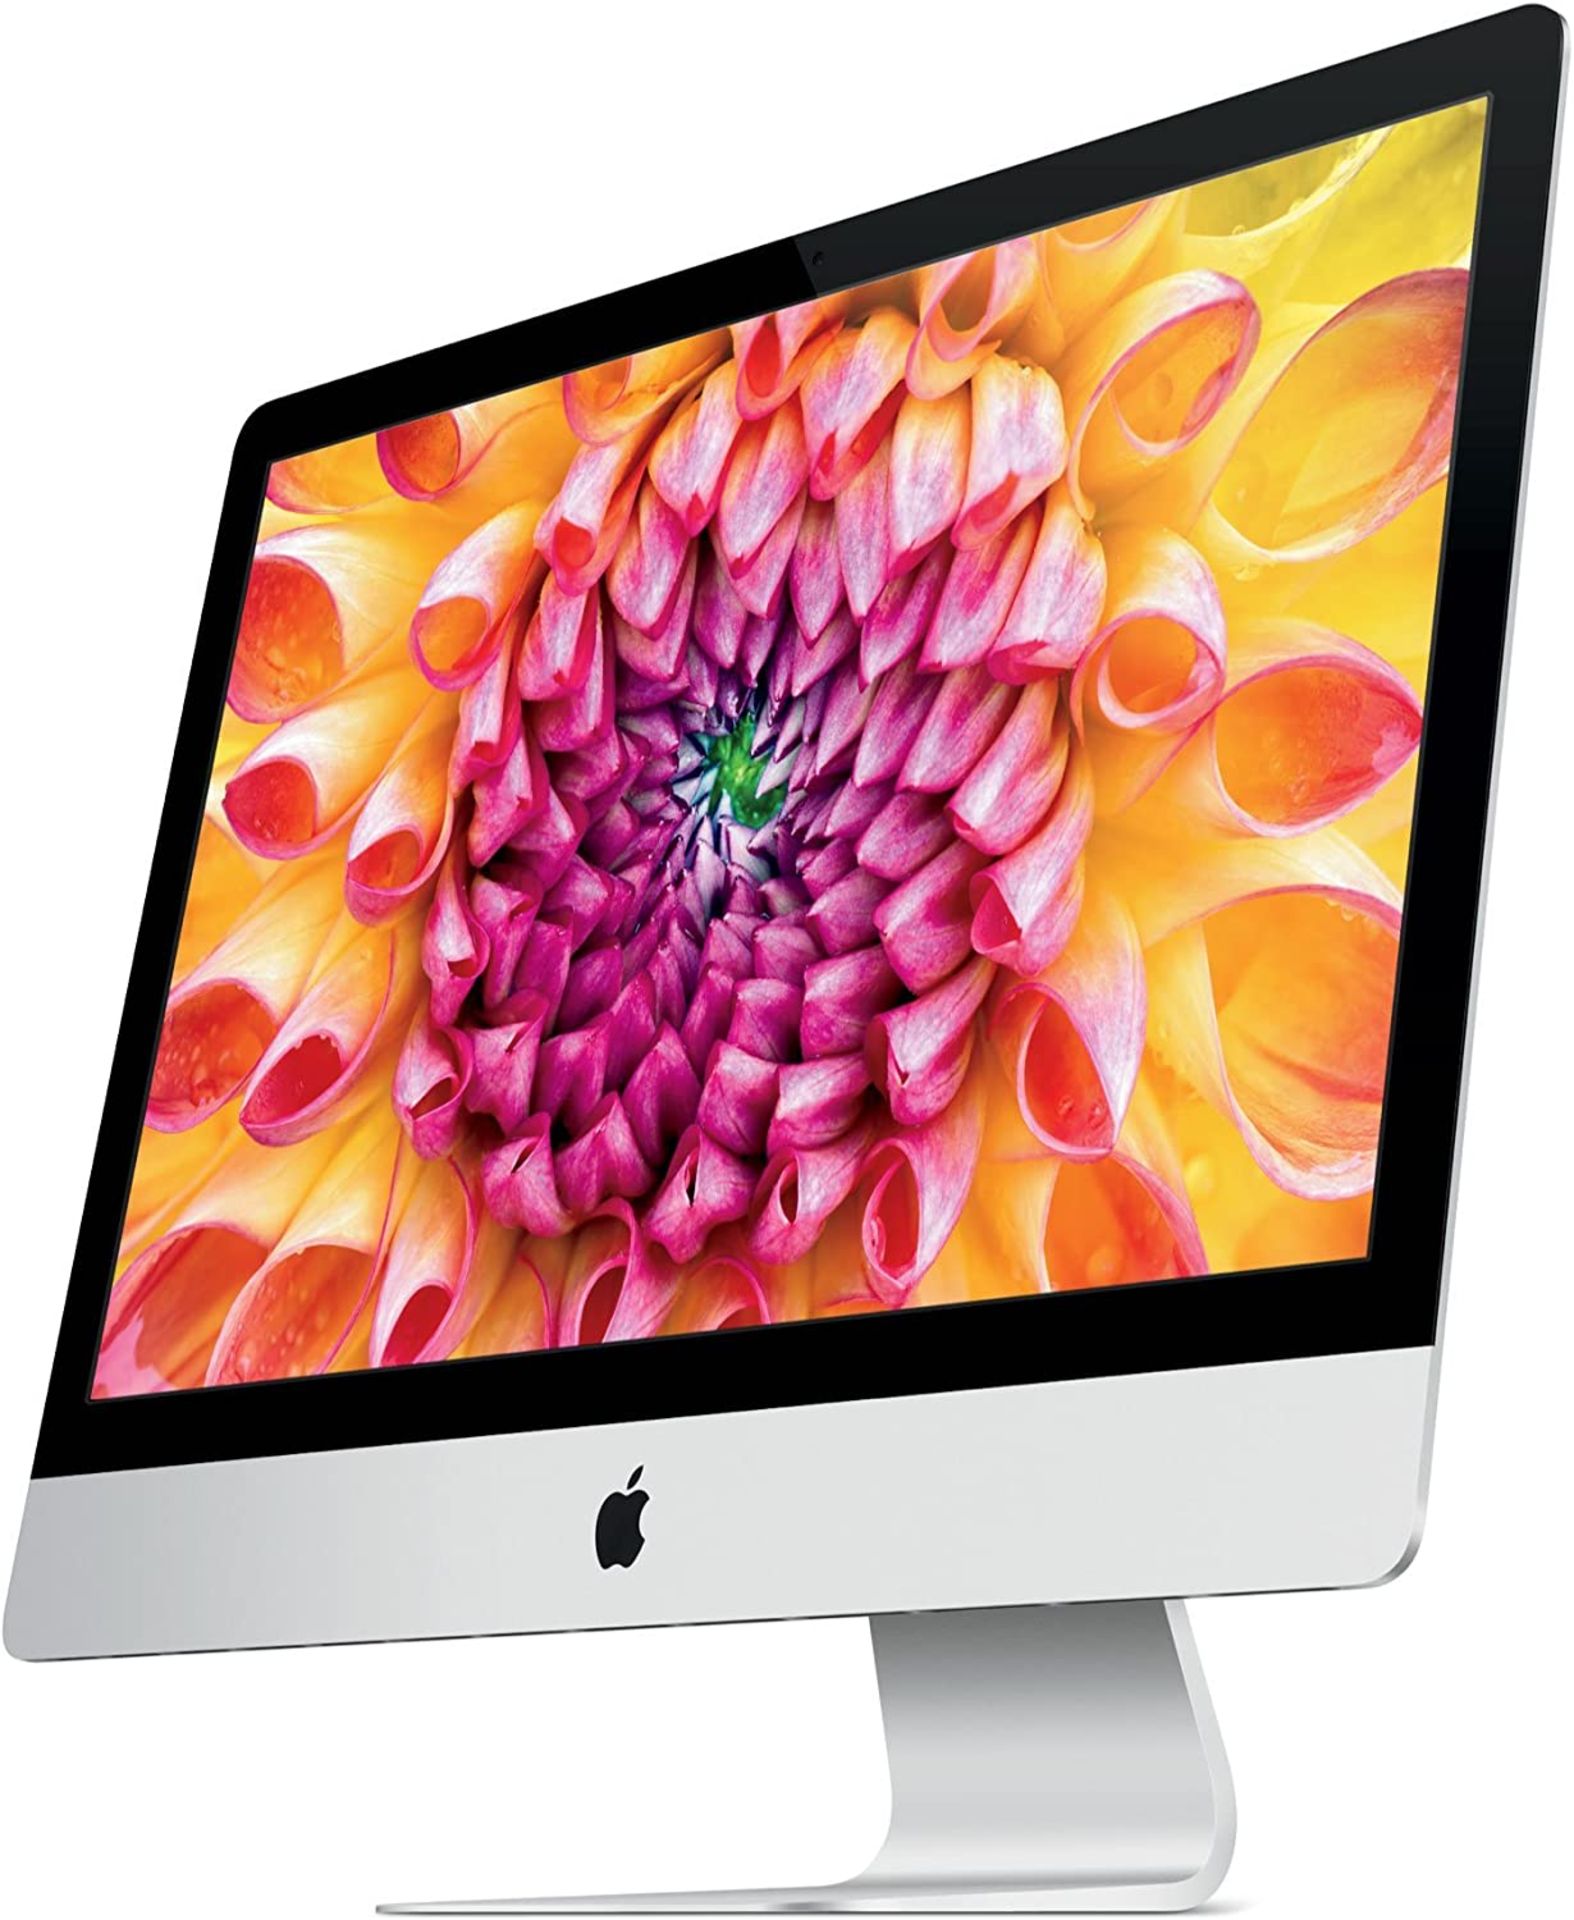 Apple iMac 21.5” A1418 (2012) OS X Catalina Intel Core i5 Quad Core 8GB Memory 1TB HD WiFi Office - Image 2 of 3